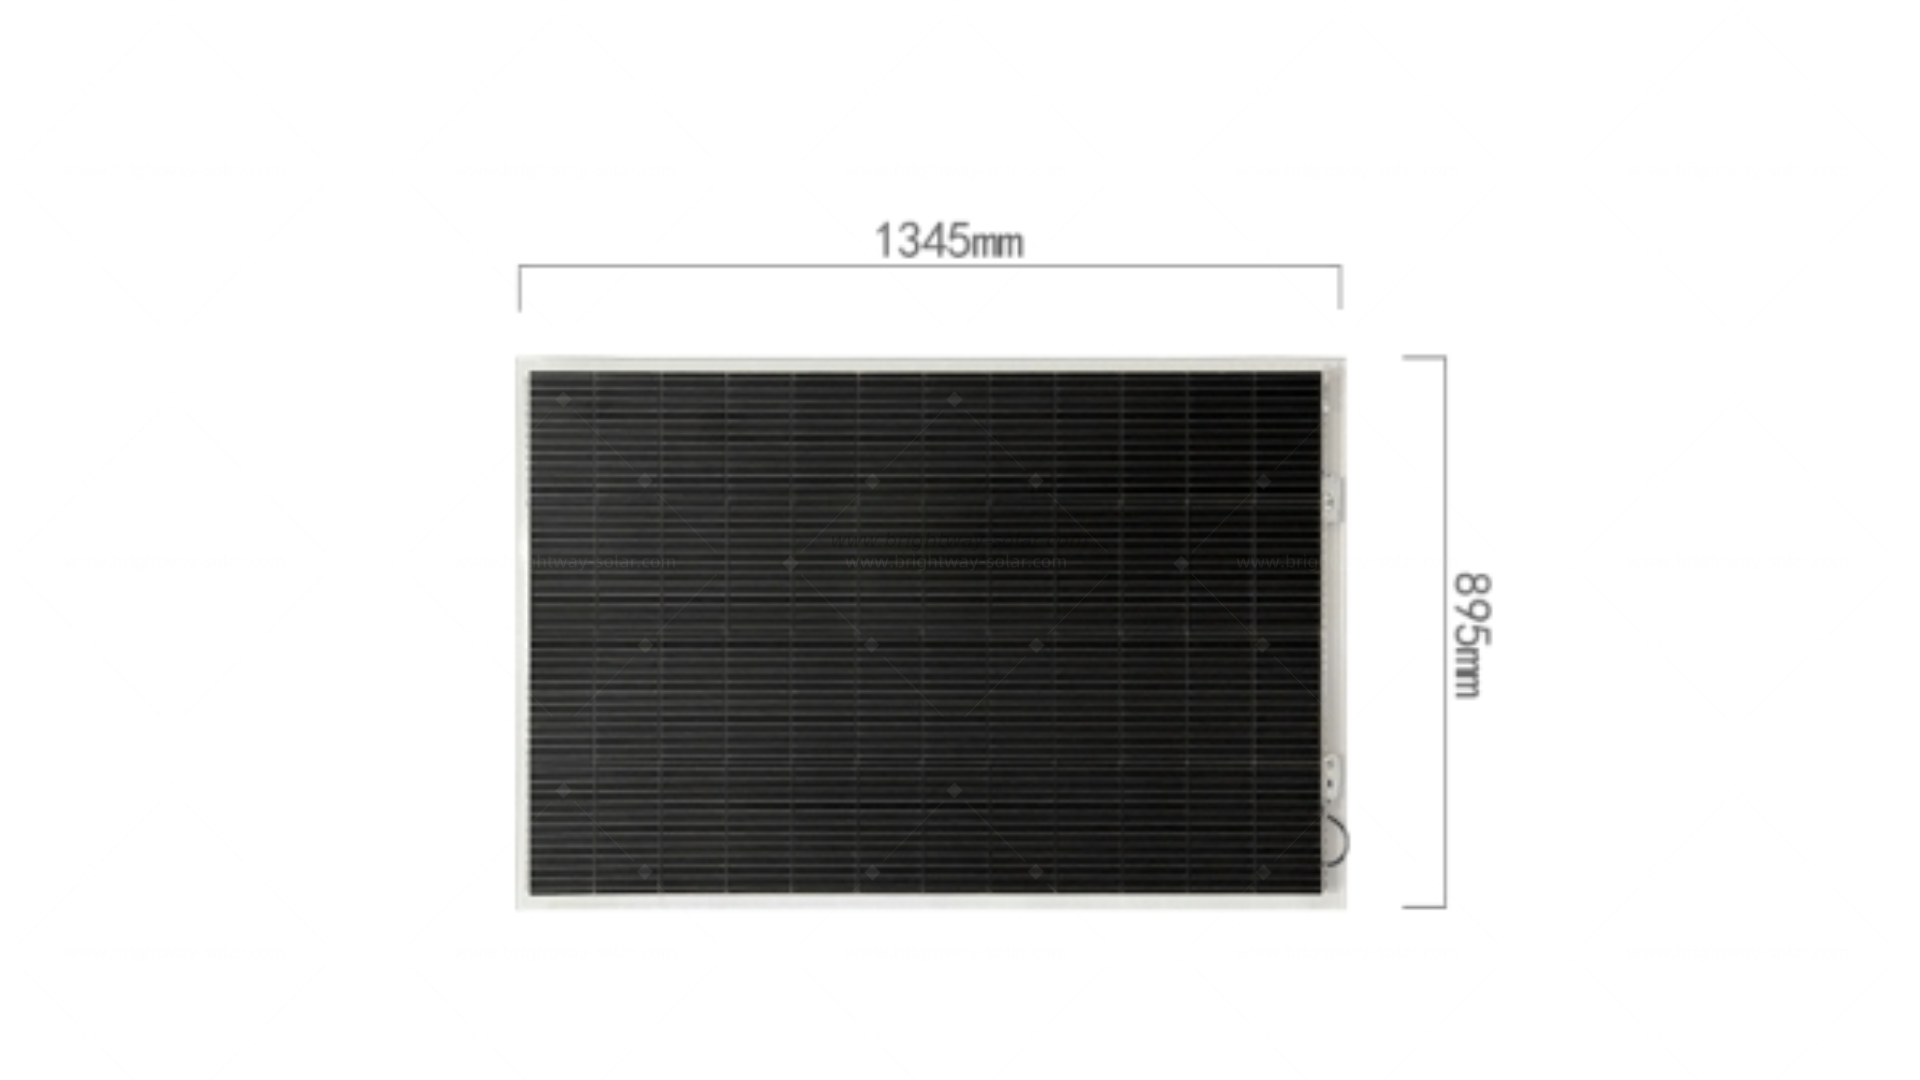 Brightway Solar 230w full black Photovoltaic Panel Solar PV Module Monocrystalline Solar Panel